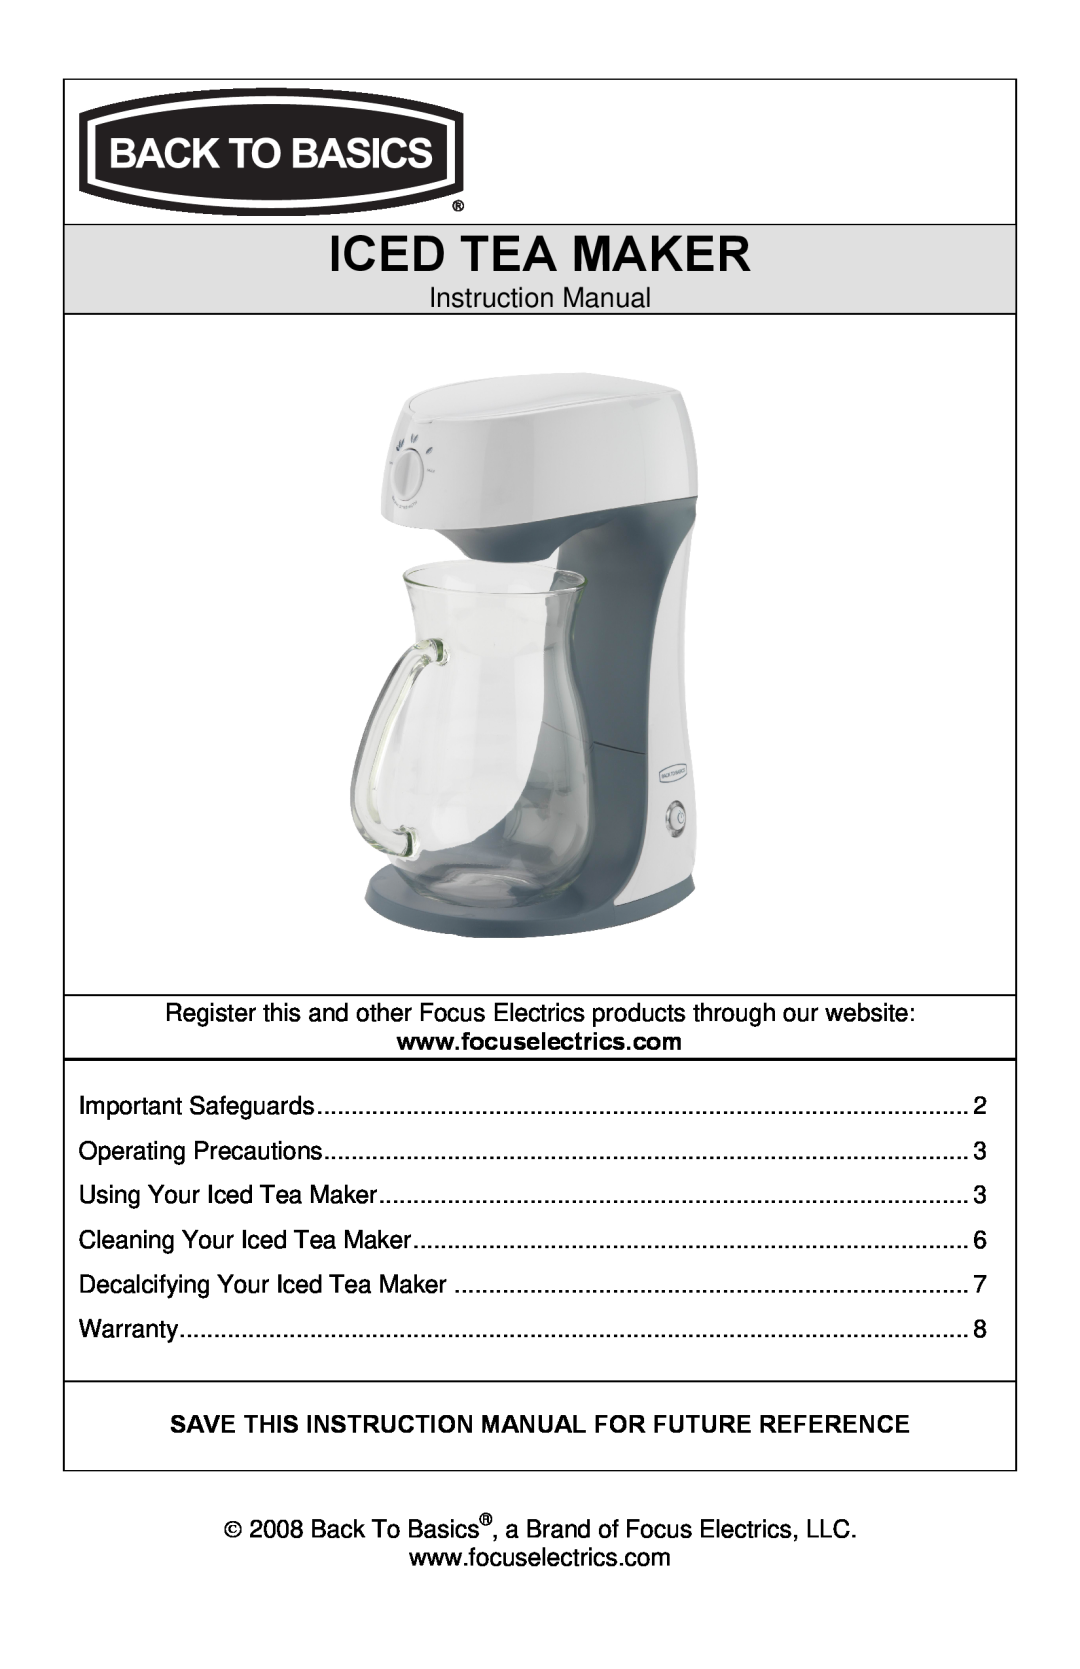 West Bend Back to Basics Ice Tea Maker instruction manual Iced Tea Maker 